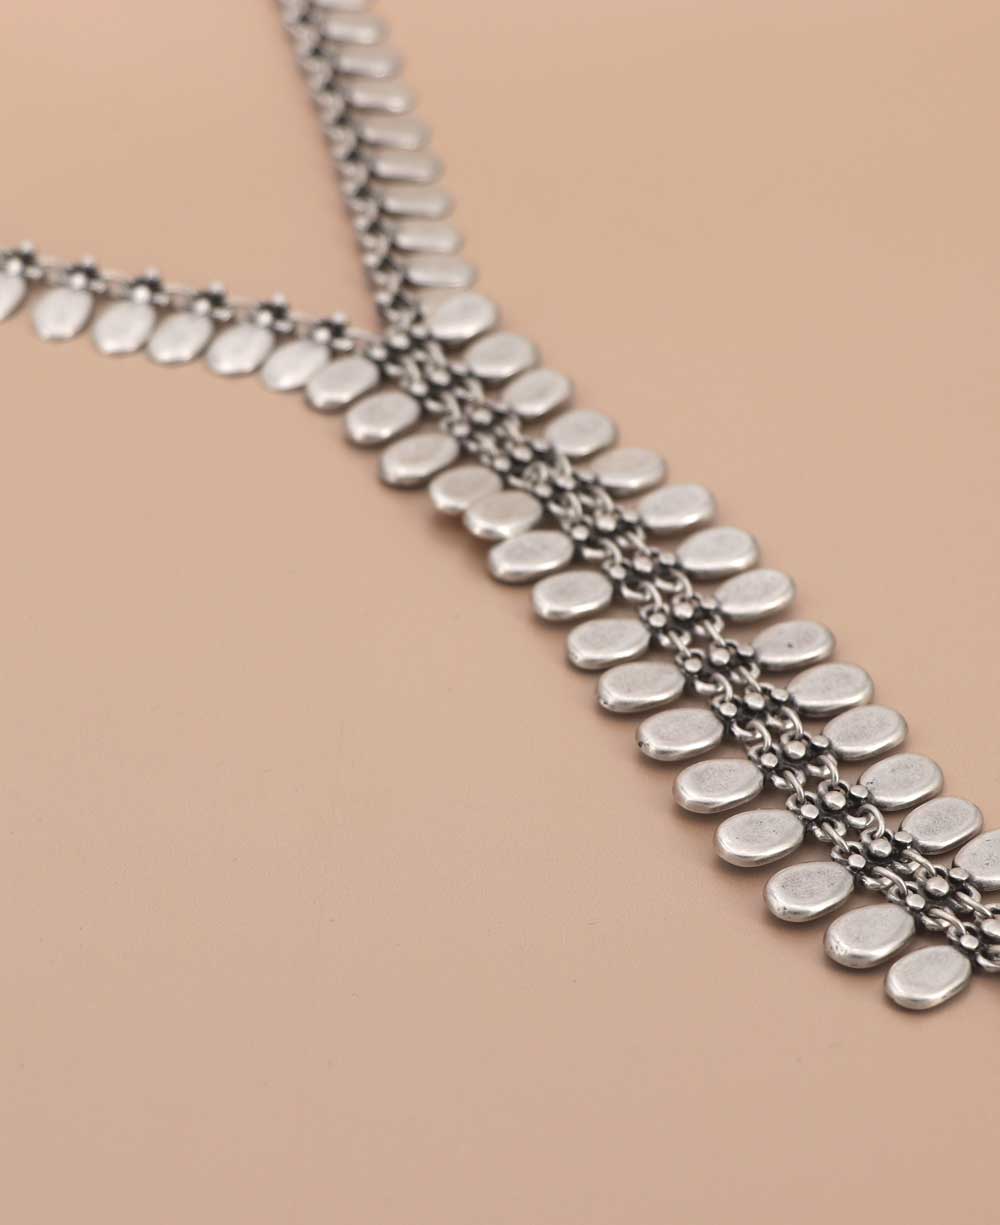 Handcrafted soldered metal necklace